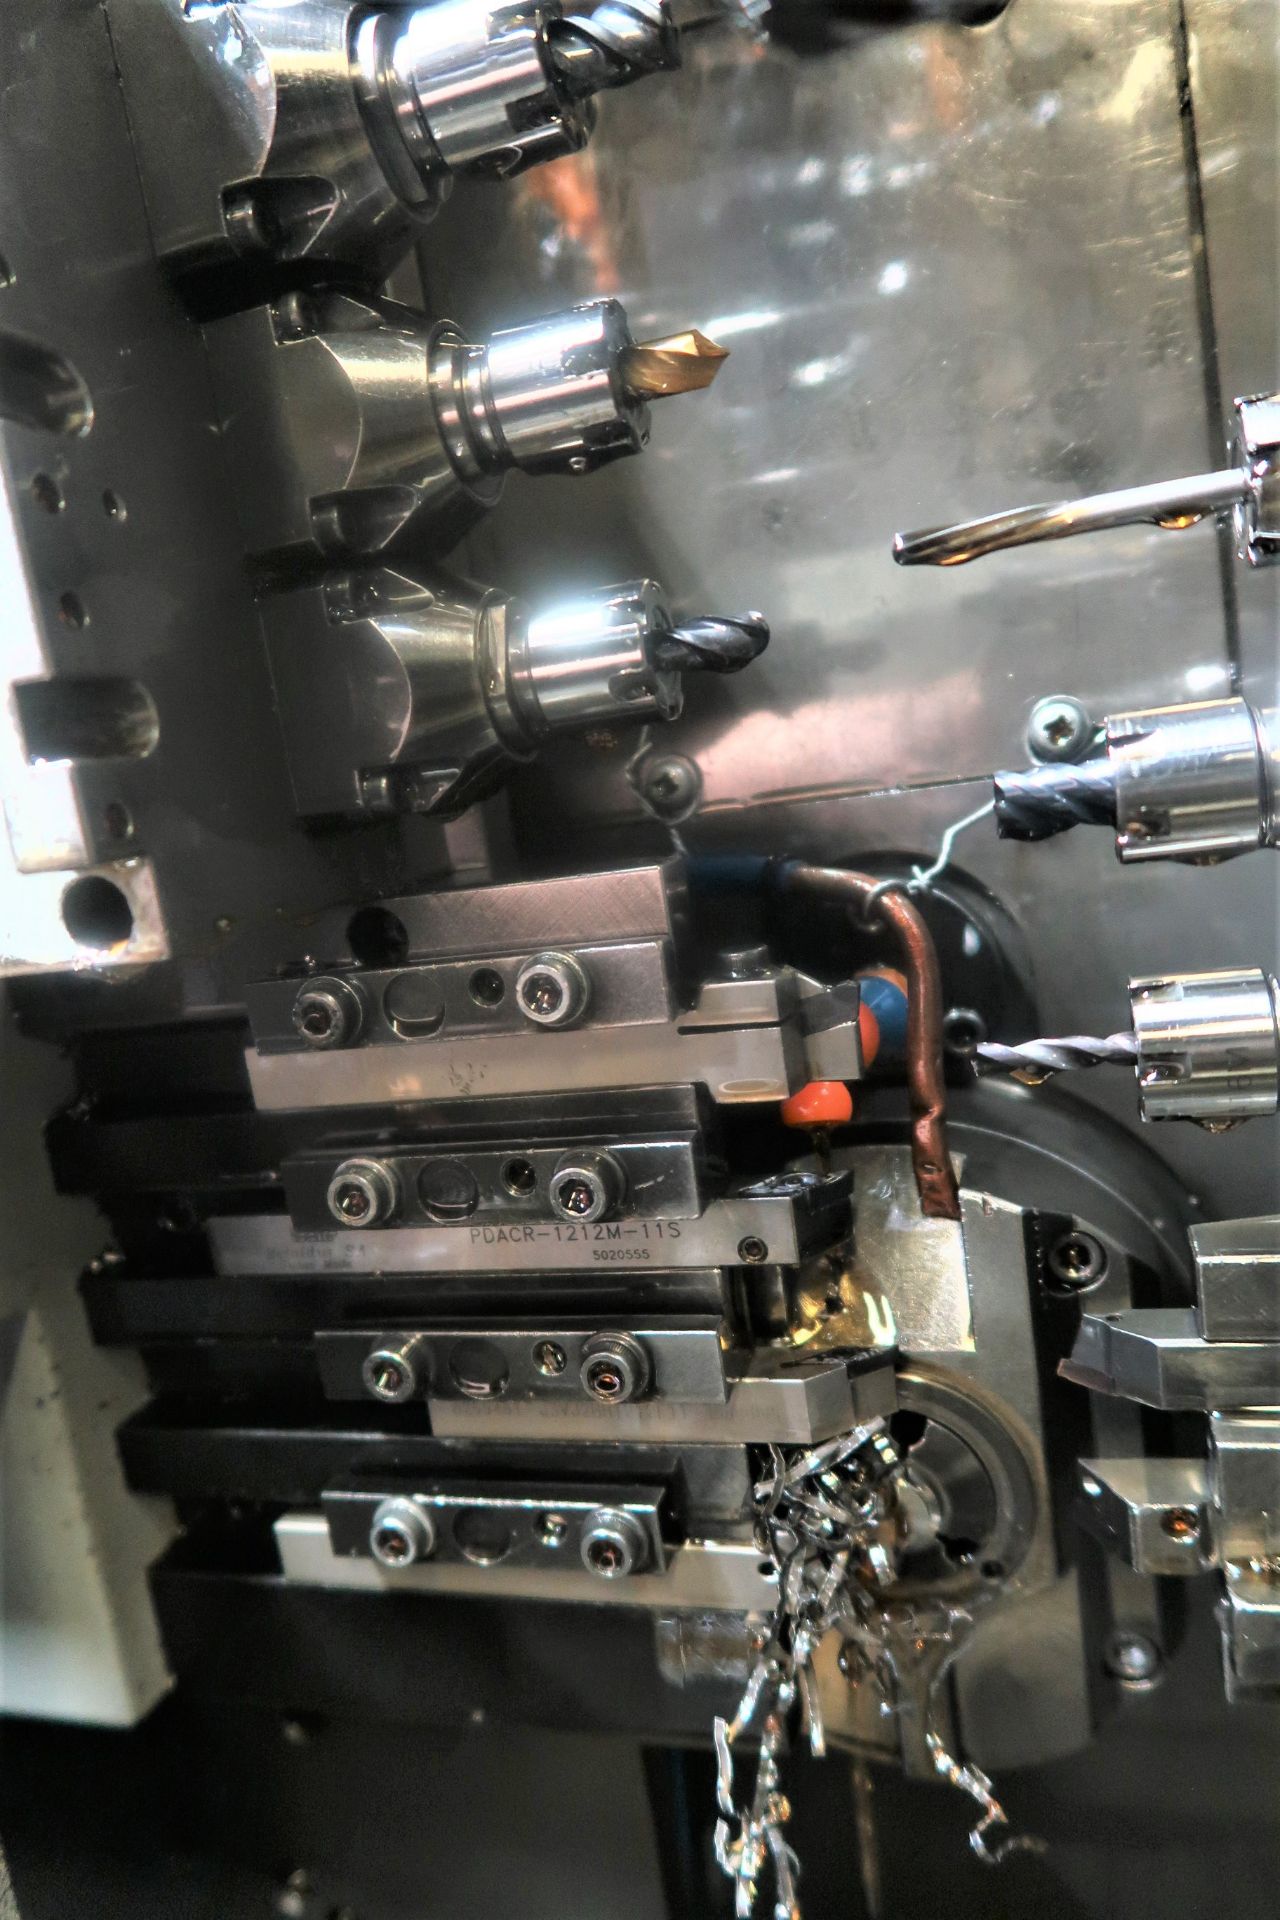 20mm Star Ecas-20 CNC Swiss Type Sliding Headstock Turning Center Lathe, S/N 0315 (028) New 205 - Image 5 of 15